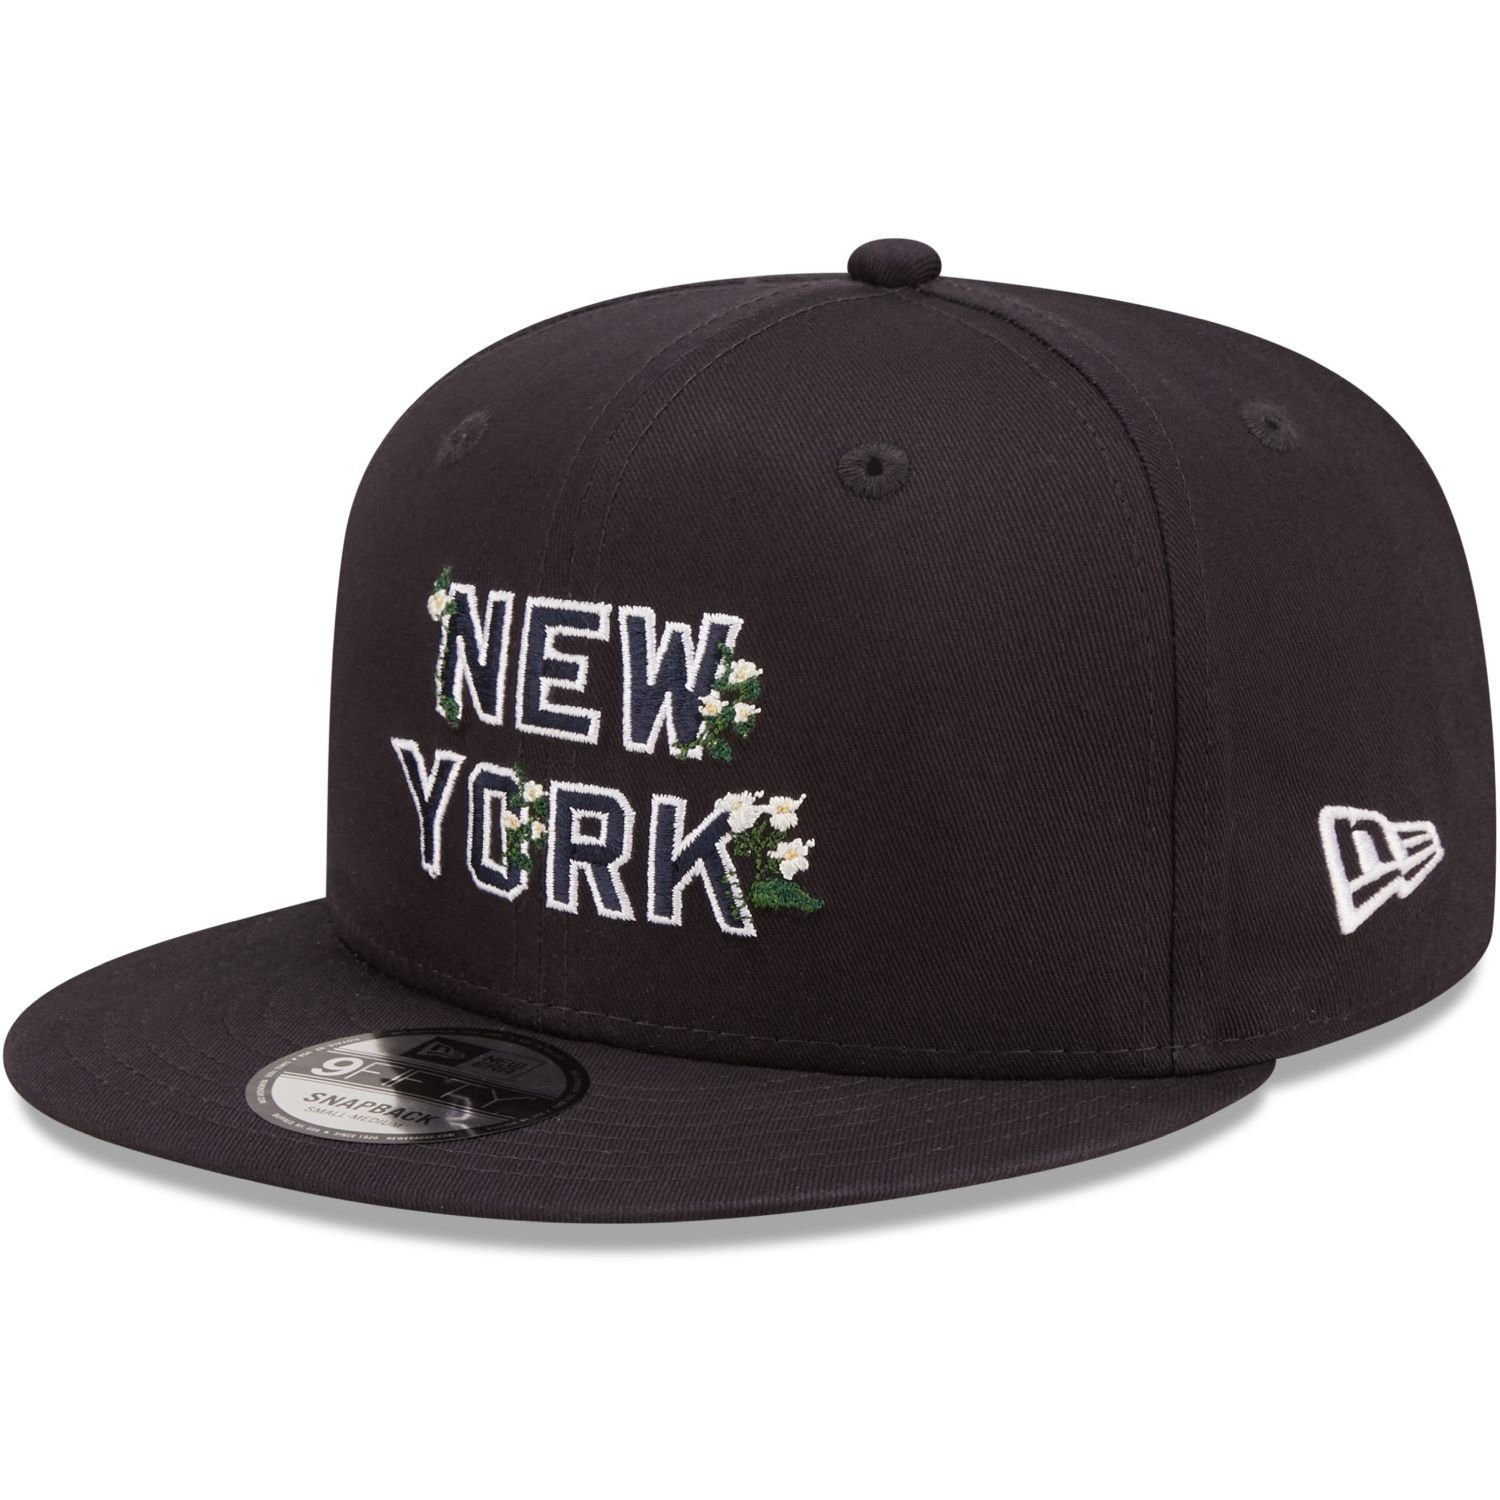 Cap Era 9Fifty Snapback York New Yankees New